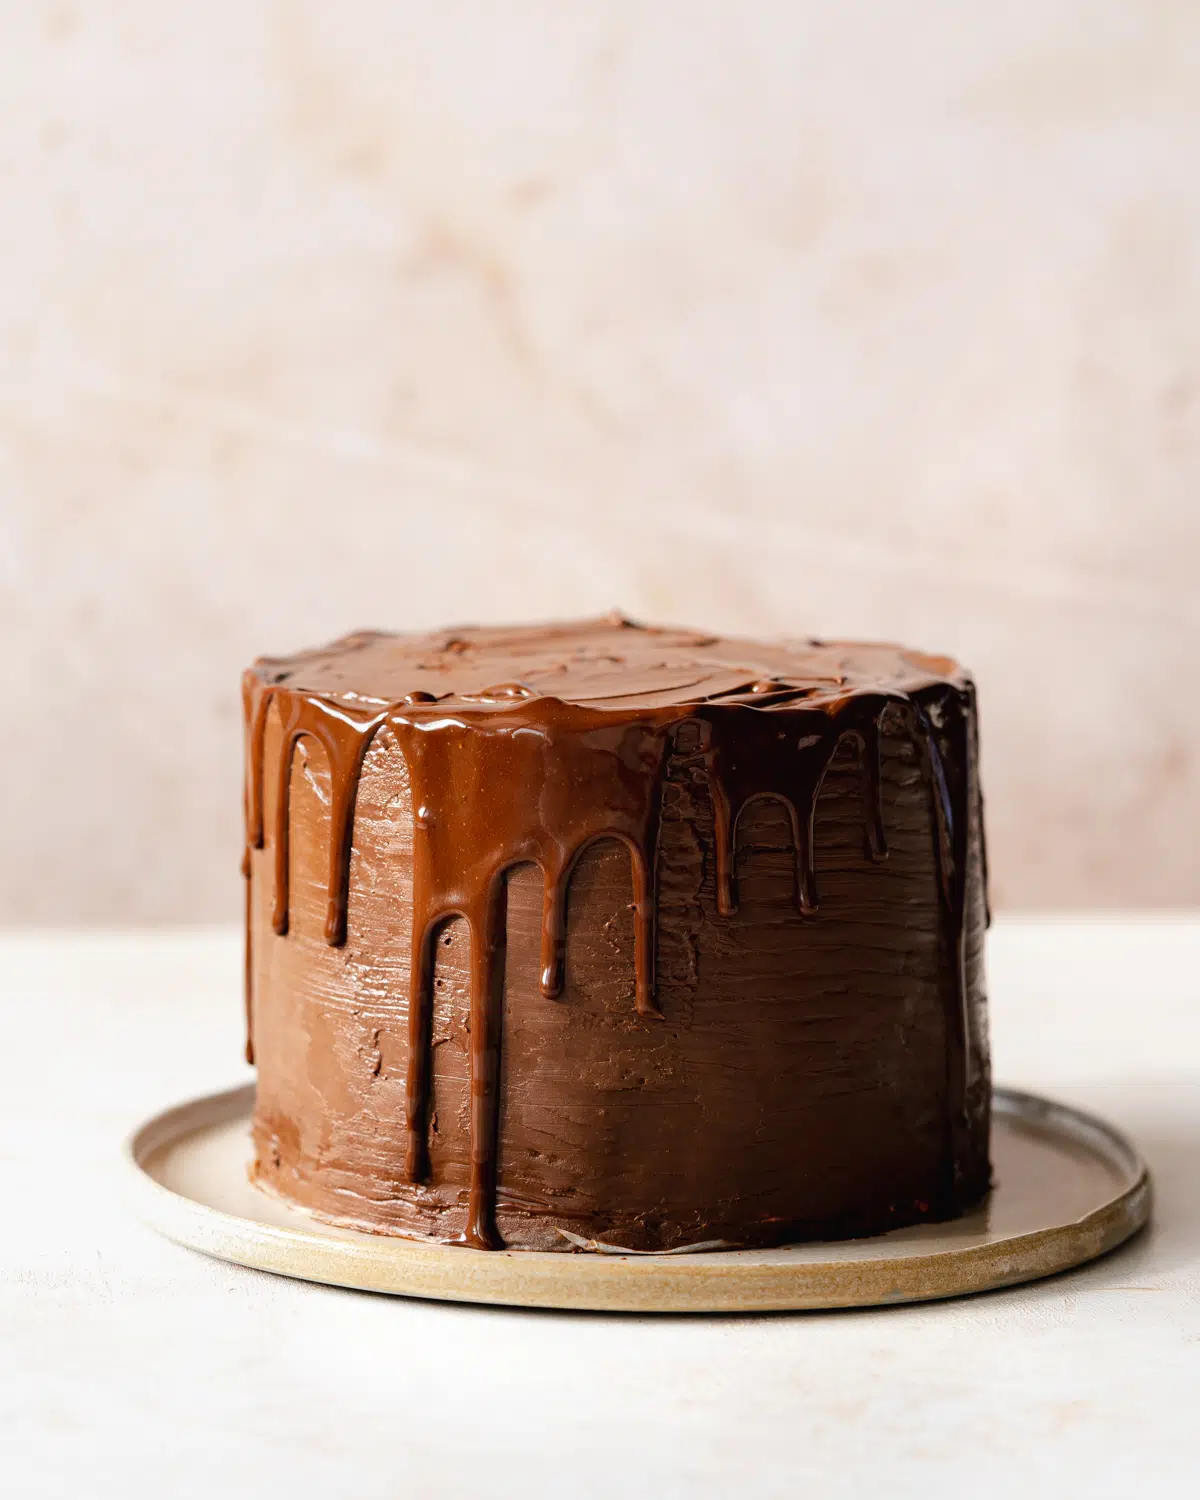 chocolate cake with ganache drip.